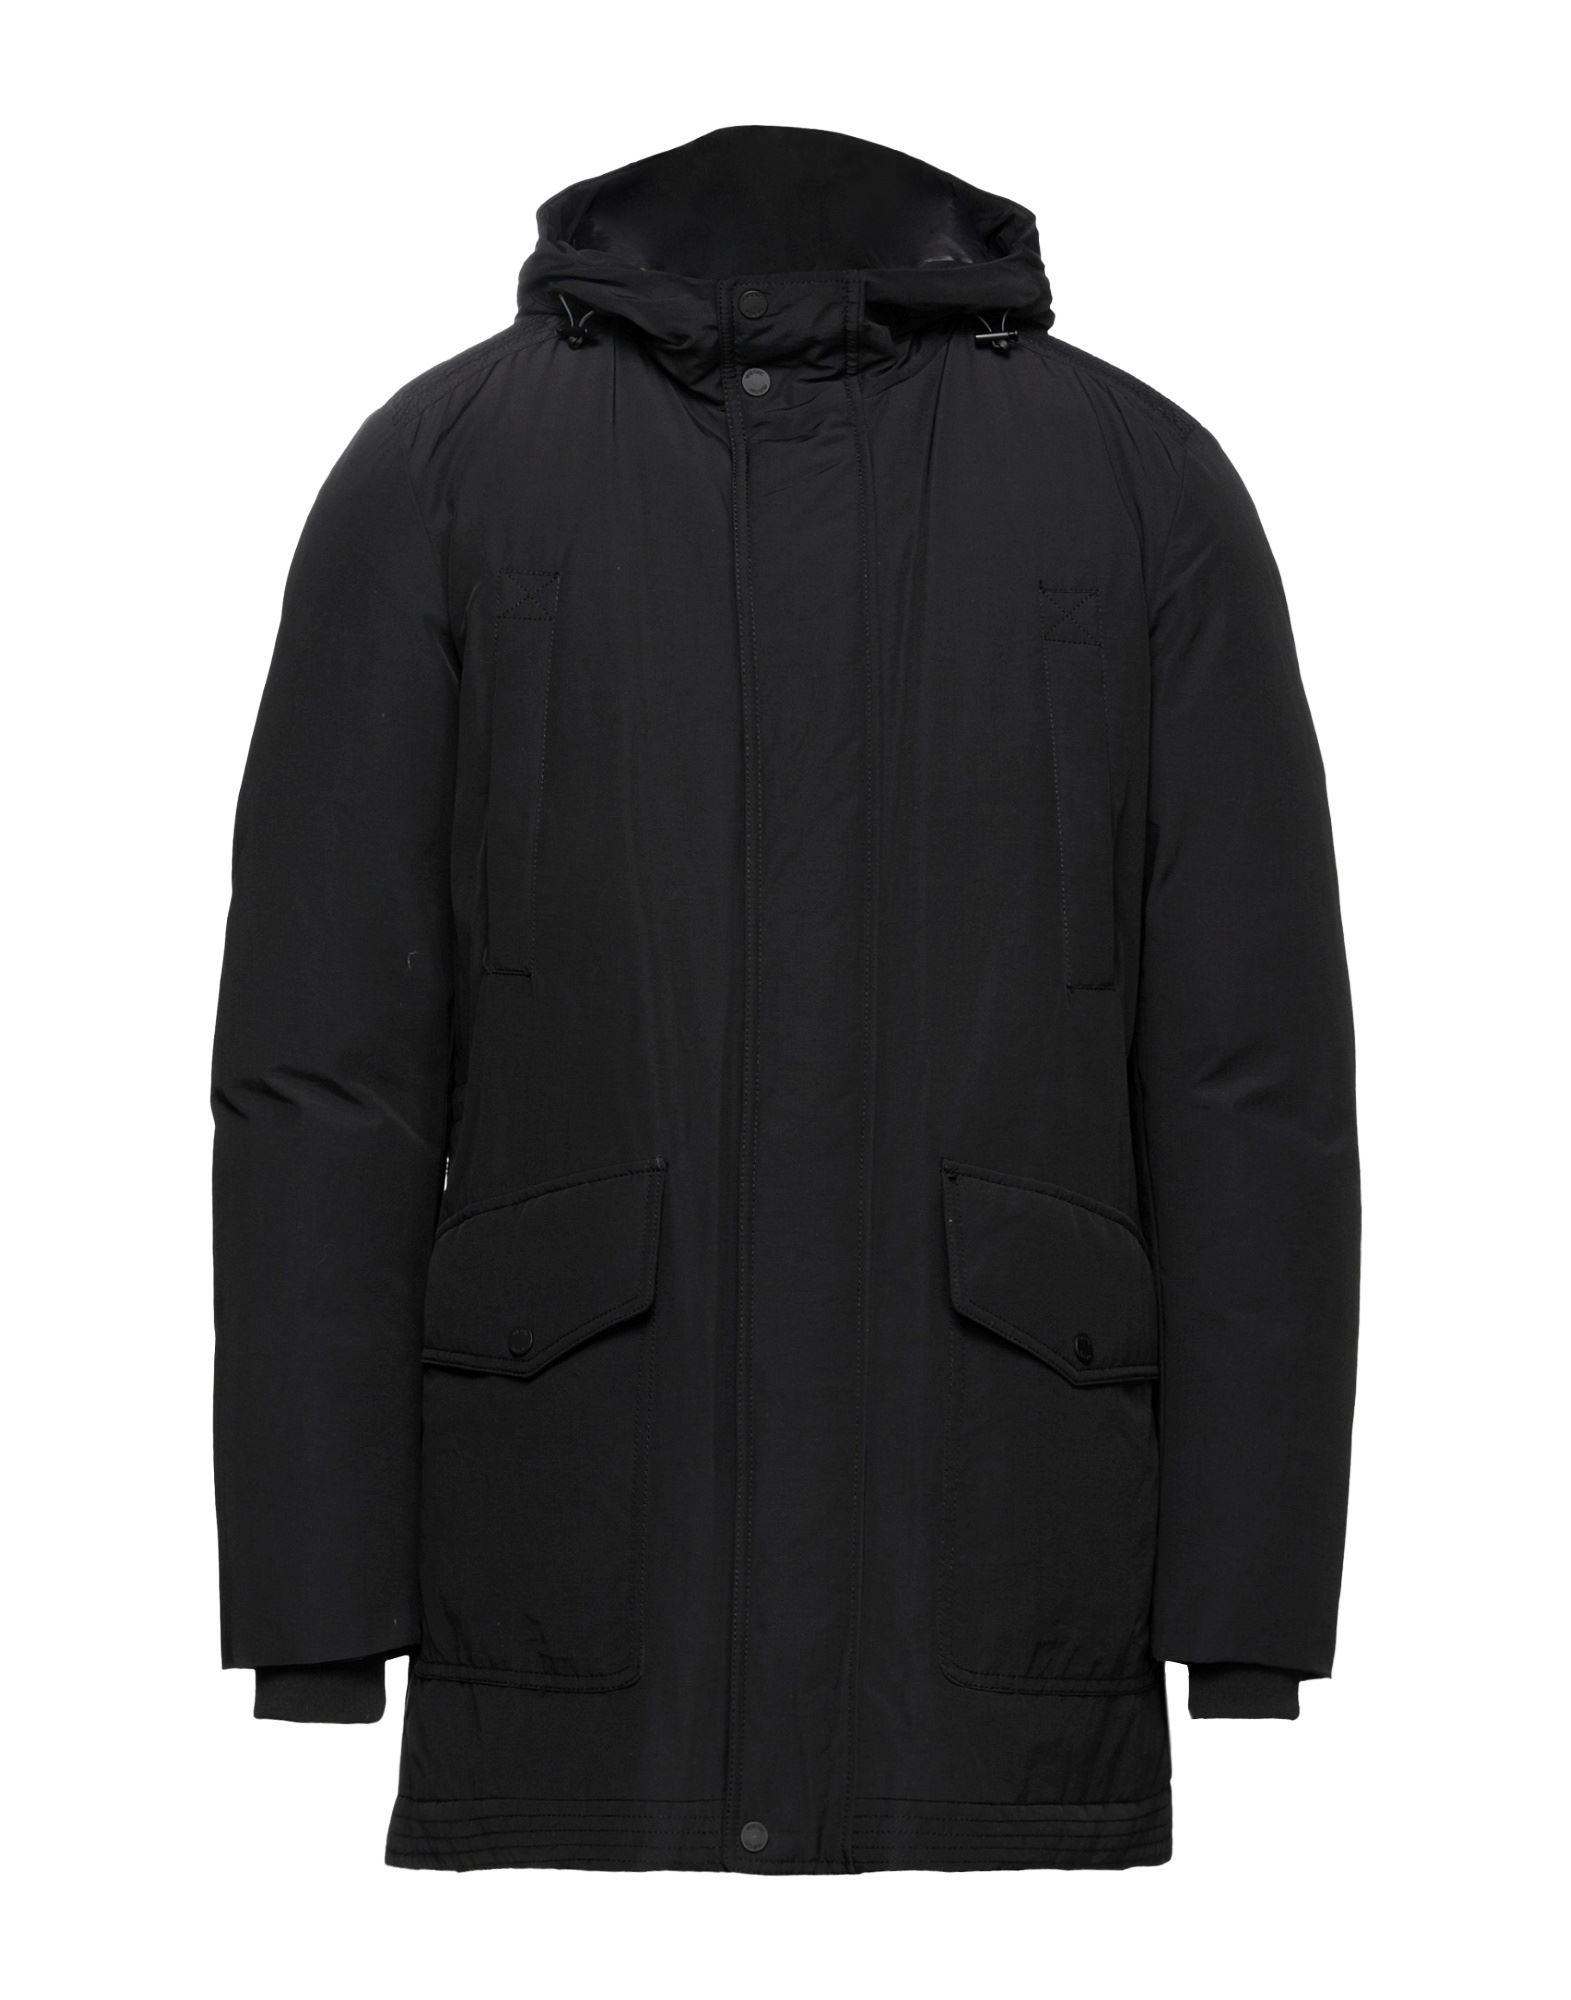 Geox Cotton Jacket in Black for Men - Lyst